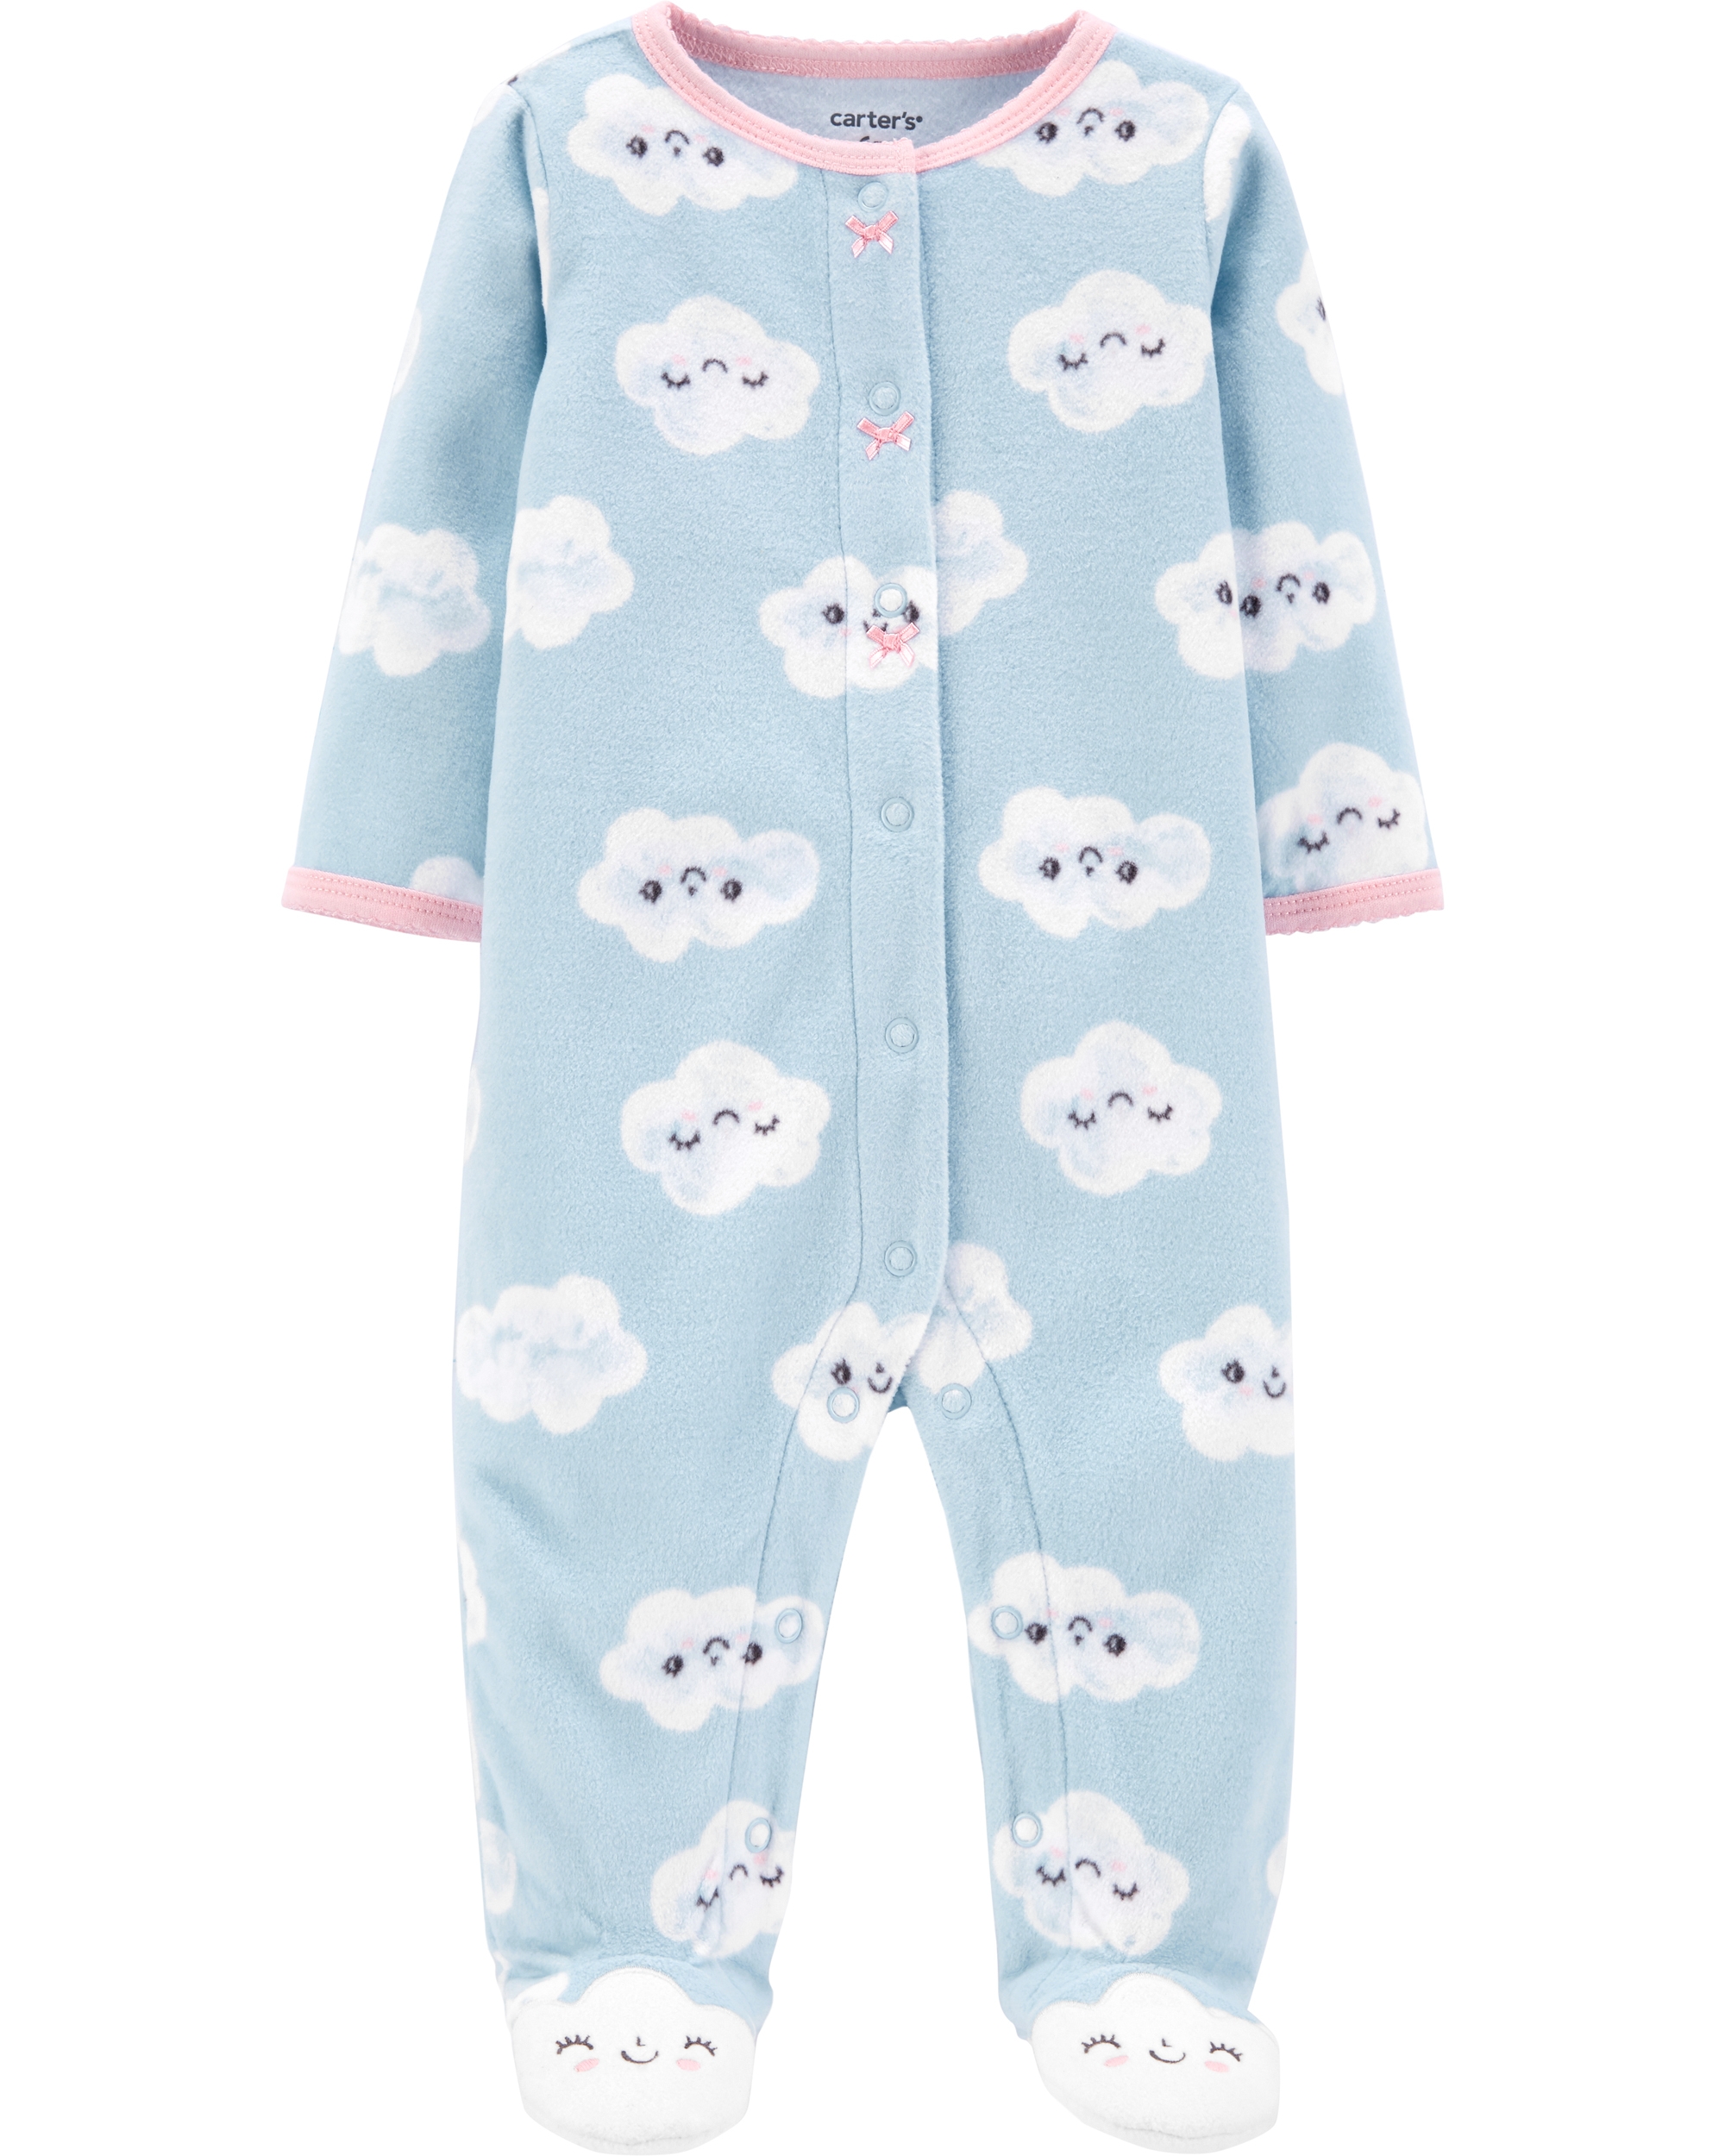 Carter’s Pijama fleece Norisori Carter's